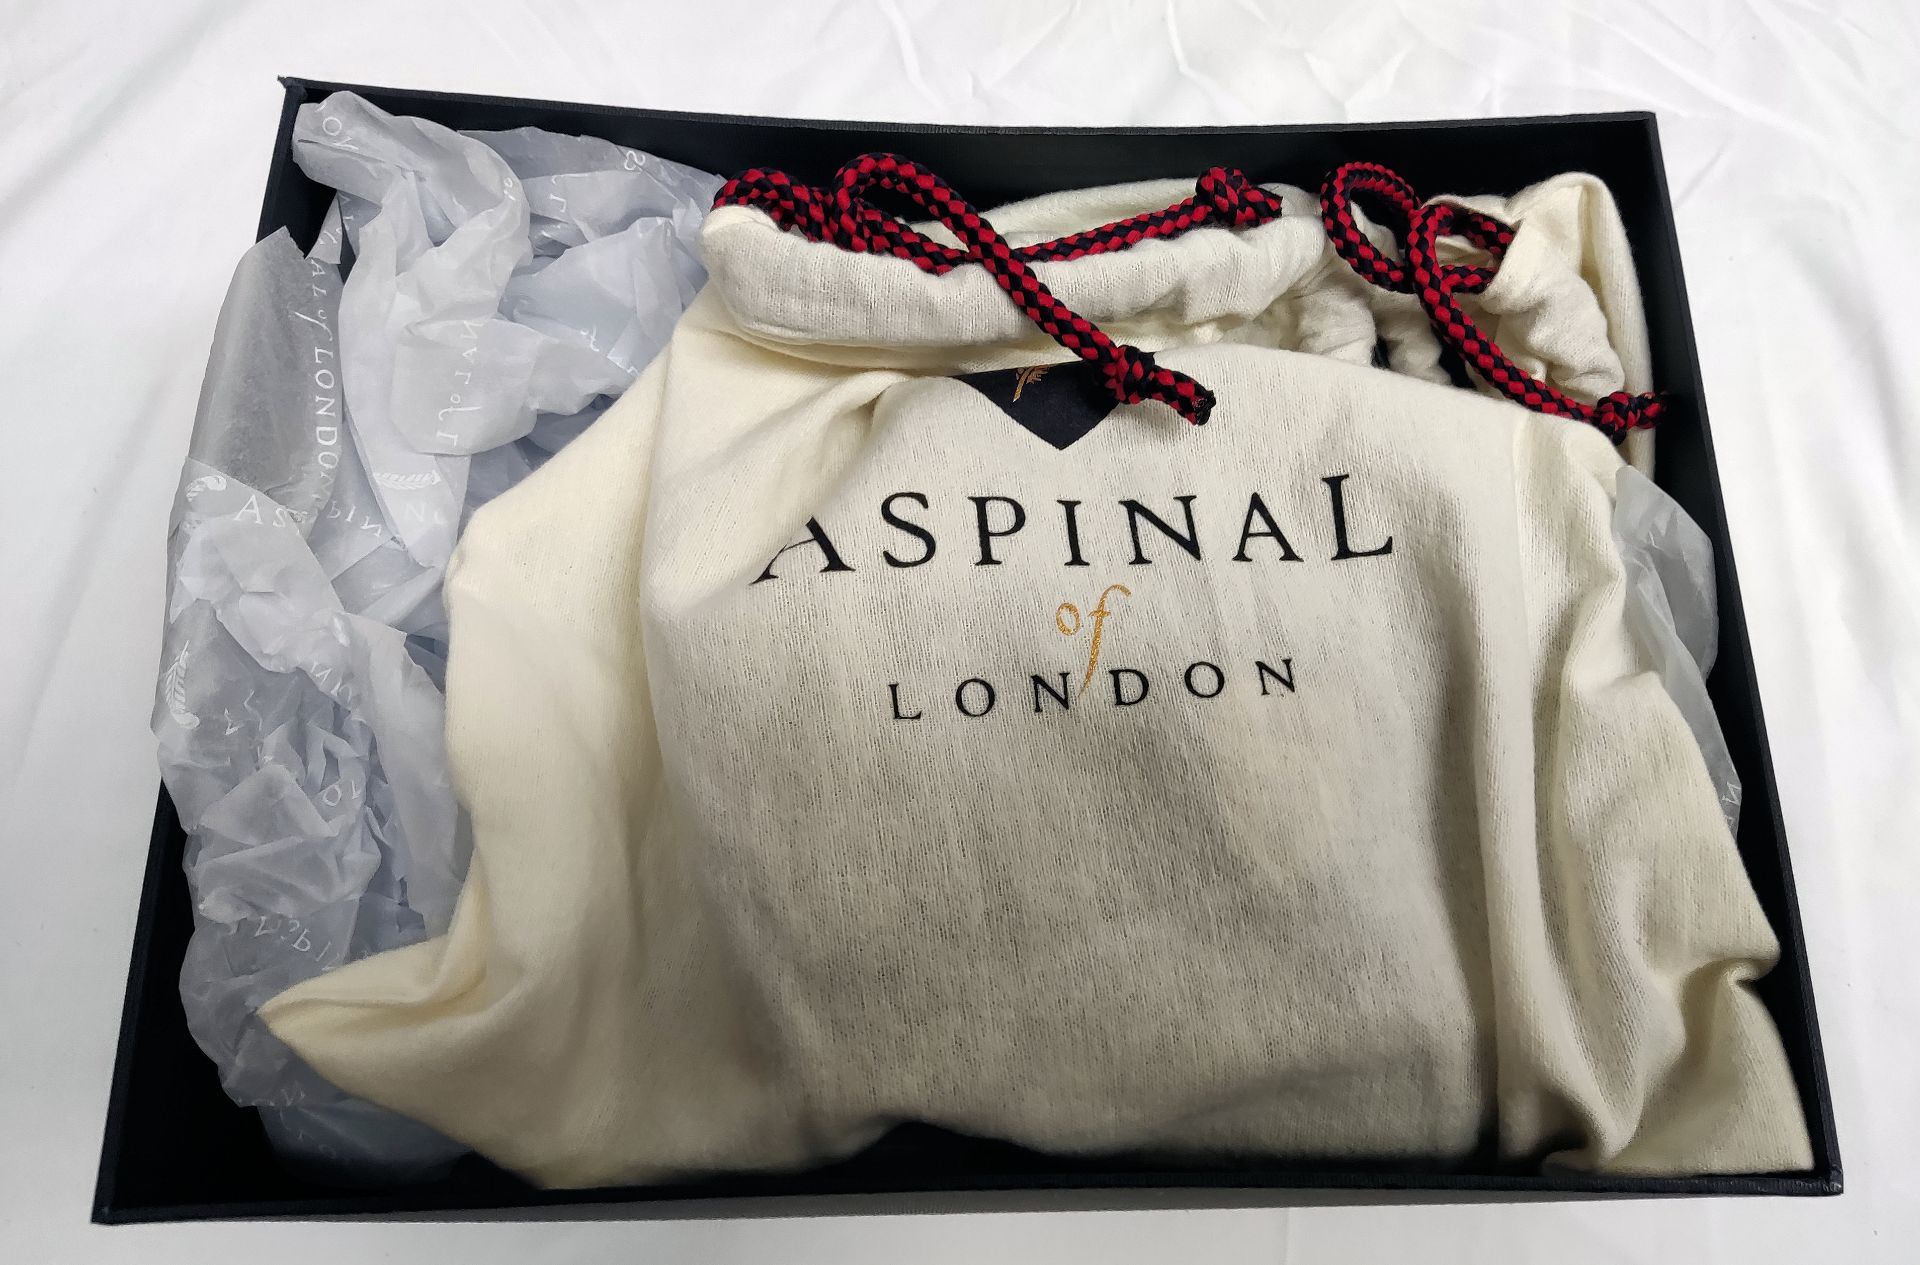 1 x ASPINAL OF LONDON Mayfair Micro Deep Shine Small Croc Bag In Black - Boxed - Original RRP £495 - - Image 10 of 17